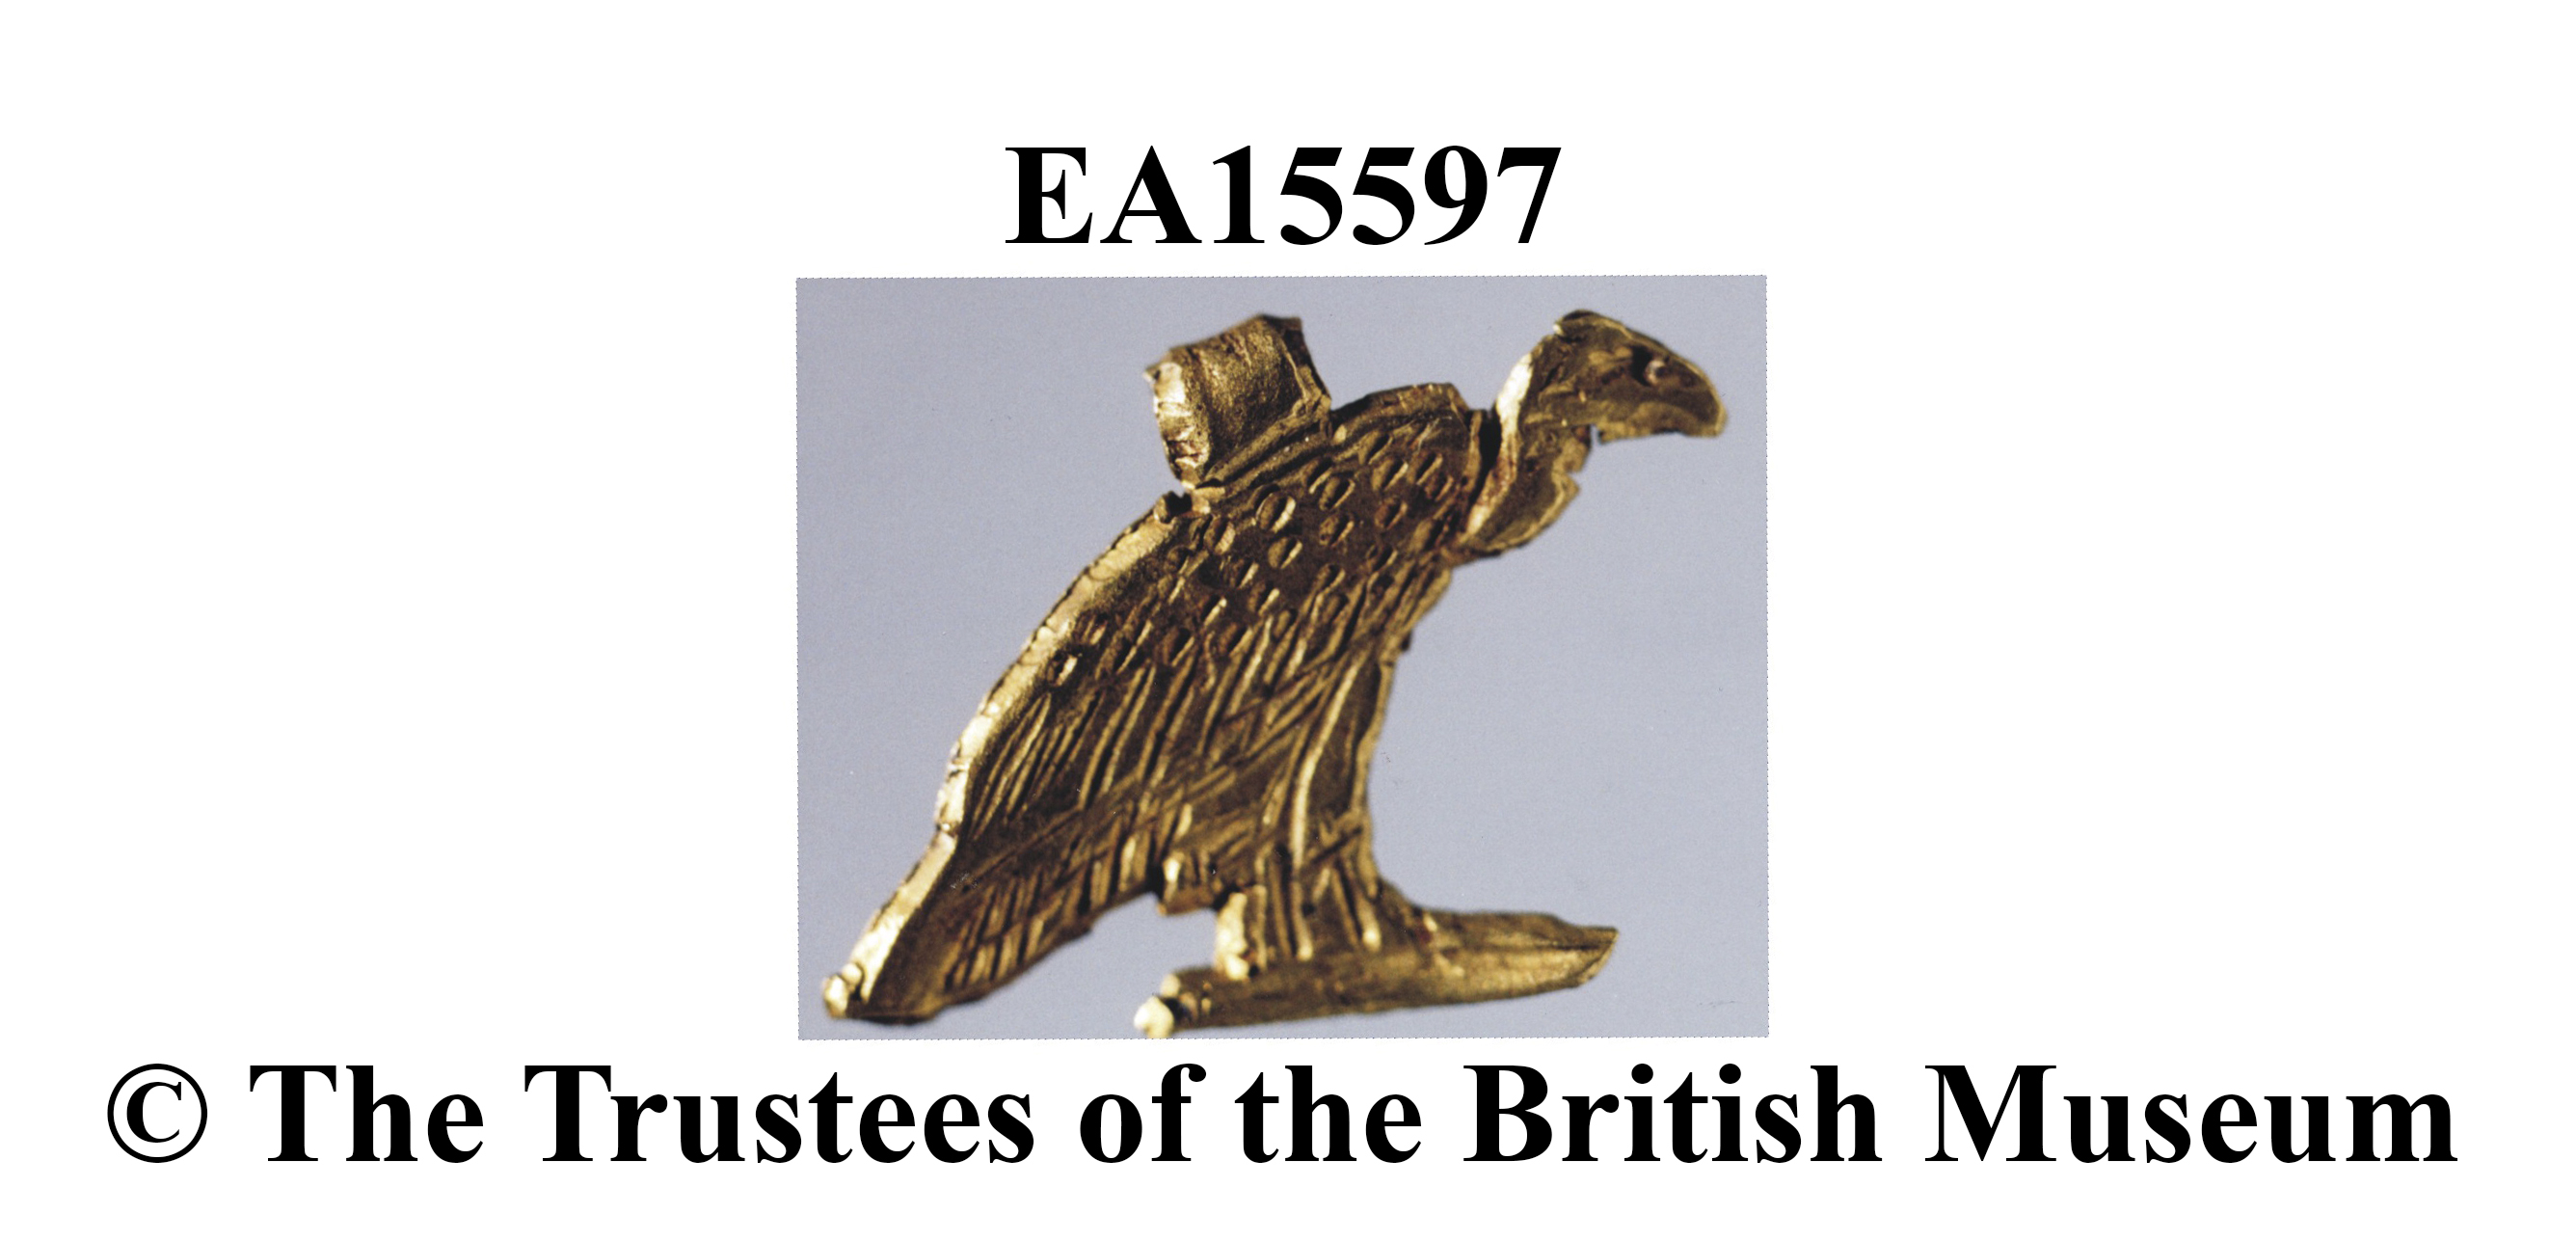 Image for: Vulture amulet